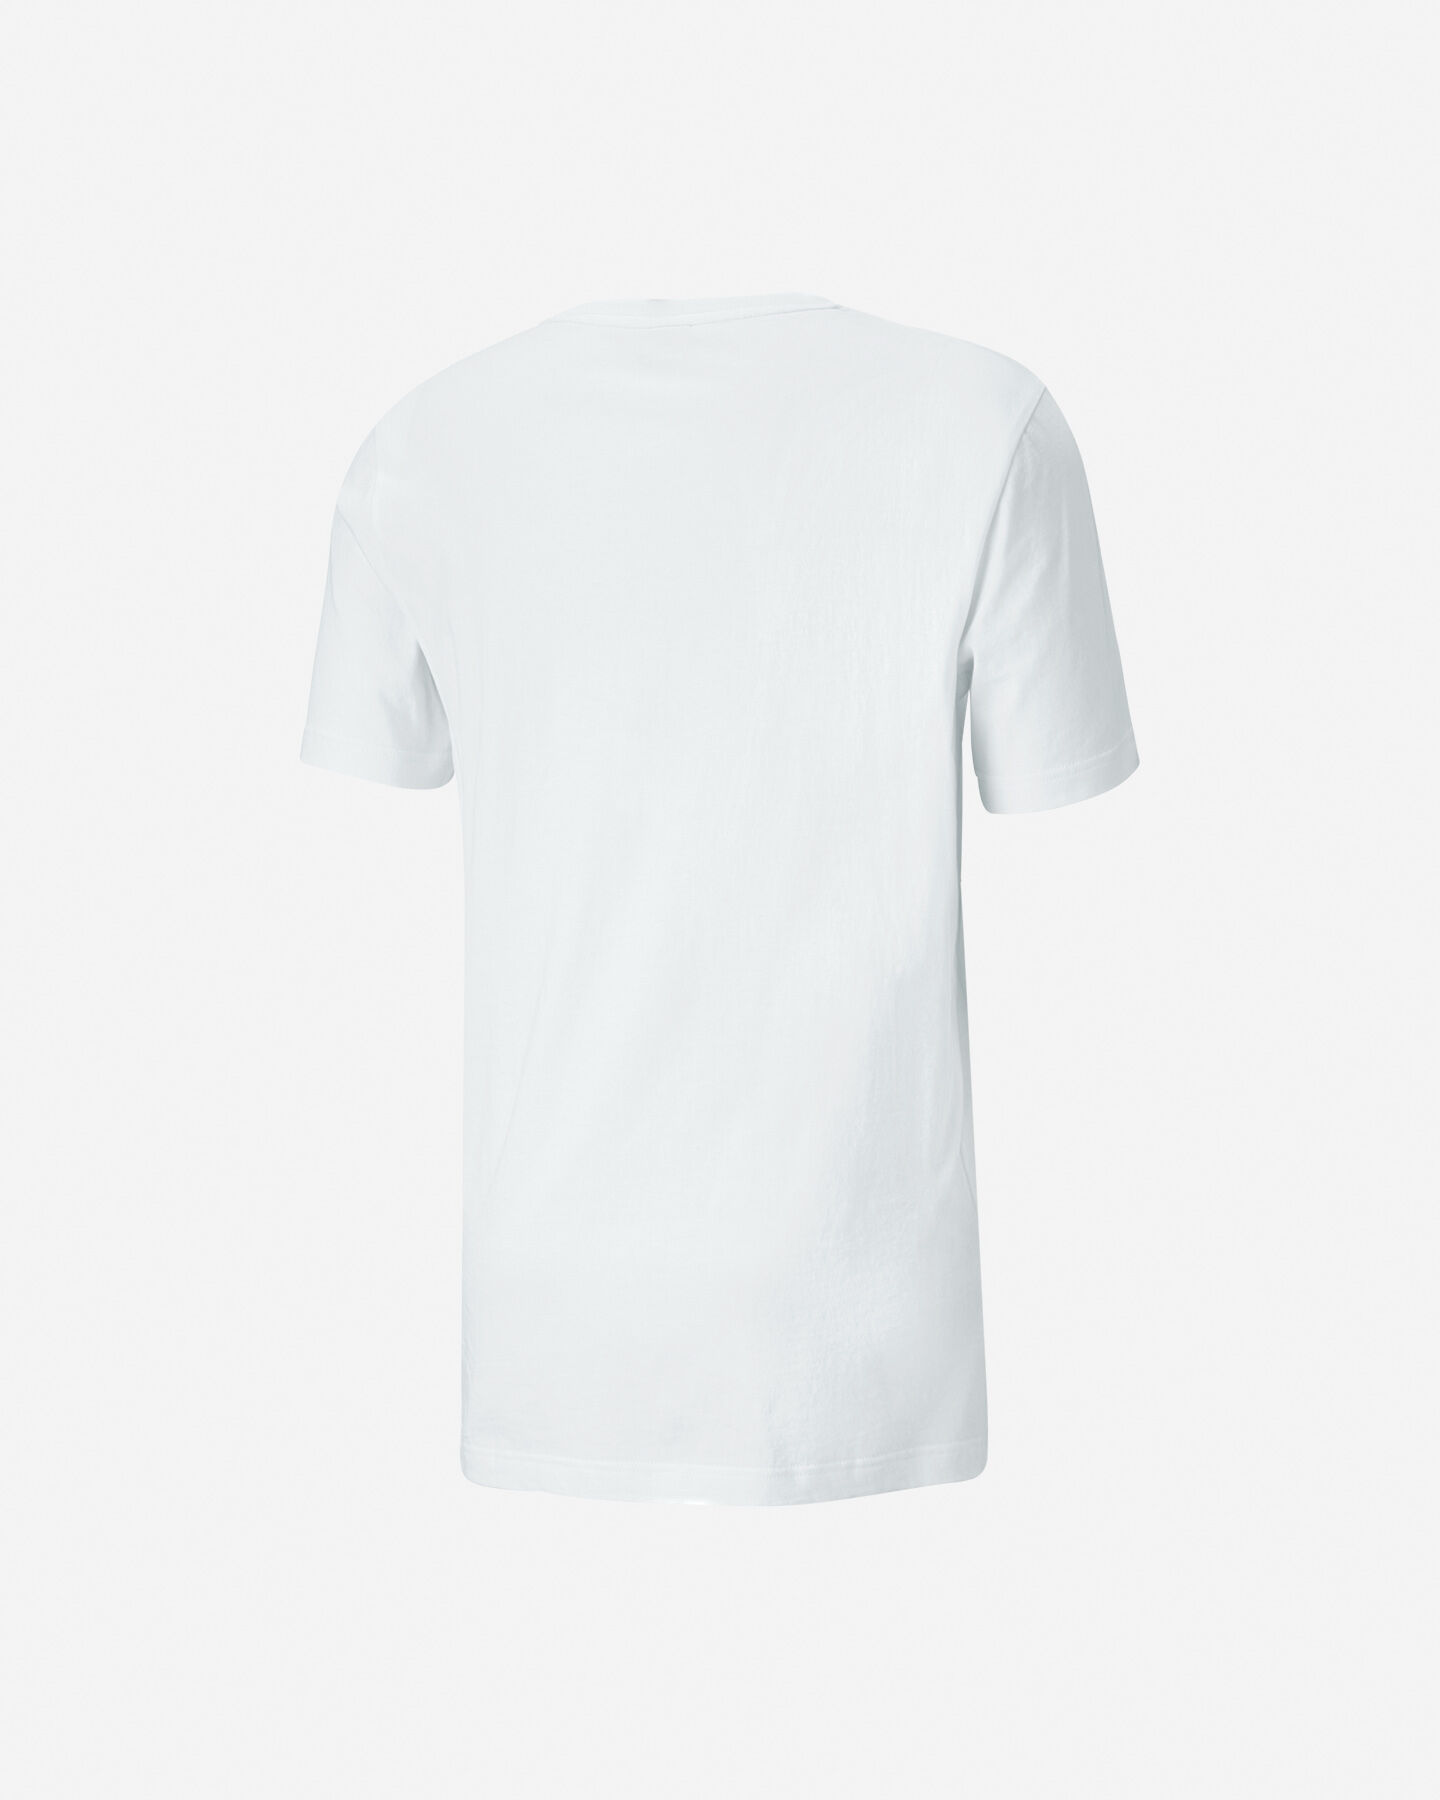  T-Shirt PUMA CLASSIC LOGO M S5235521|02|S scatto 1